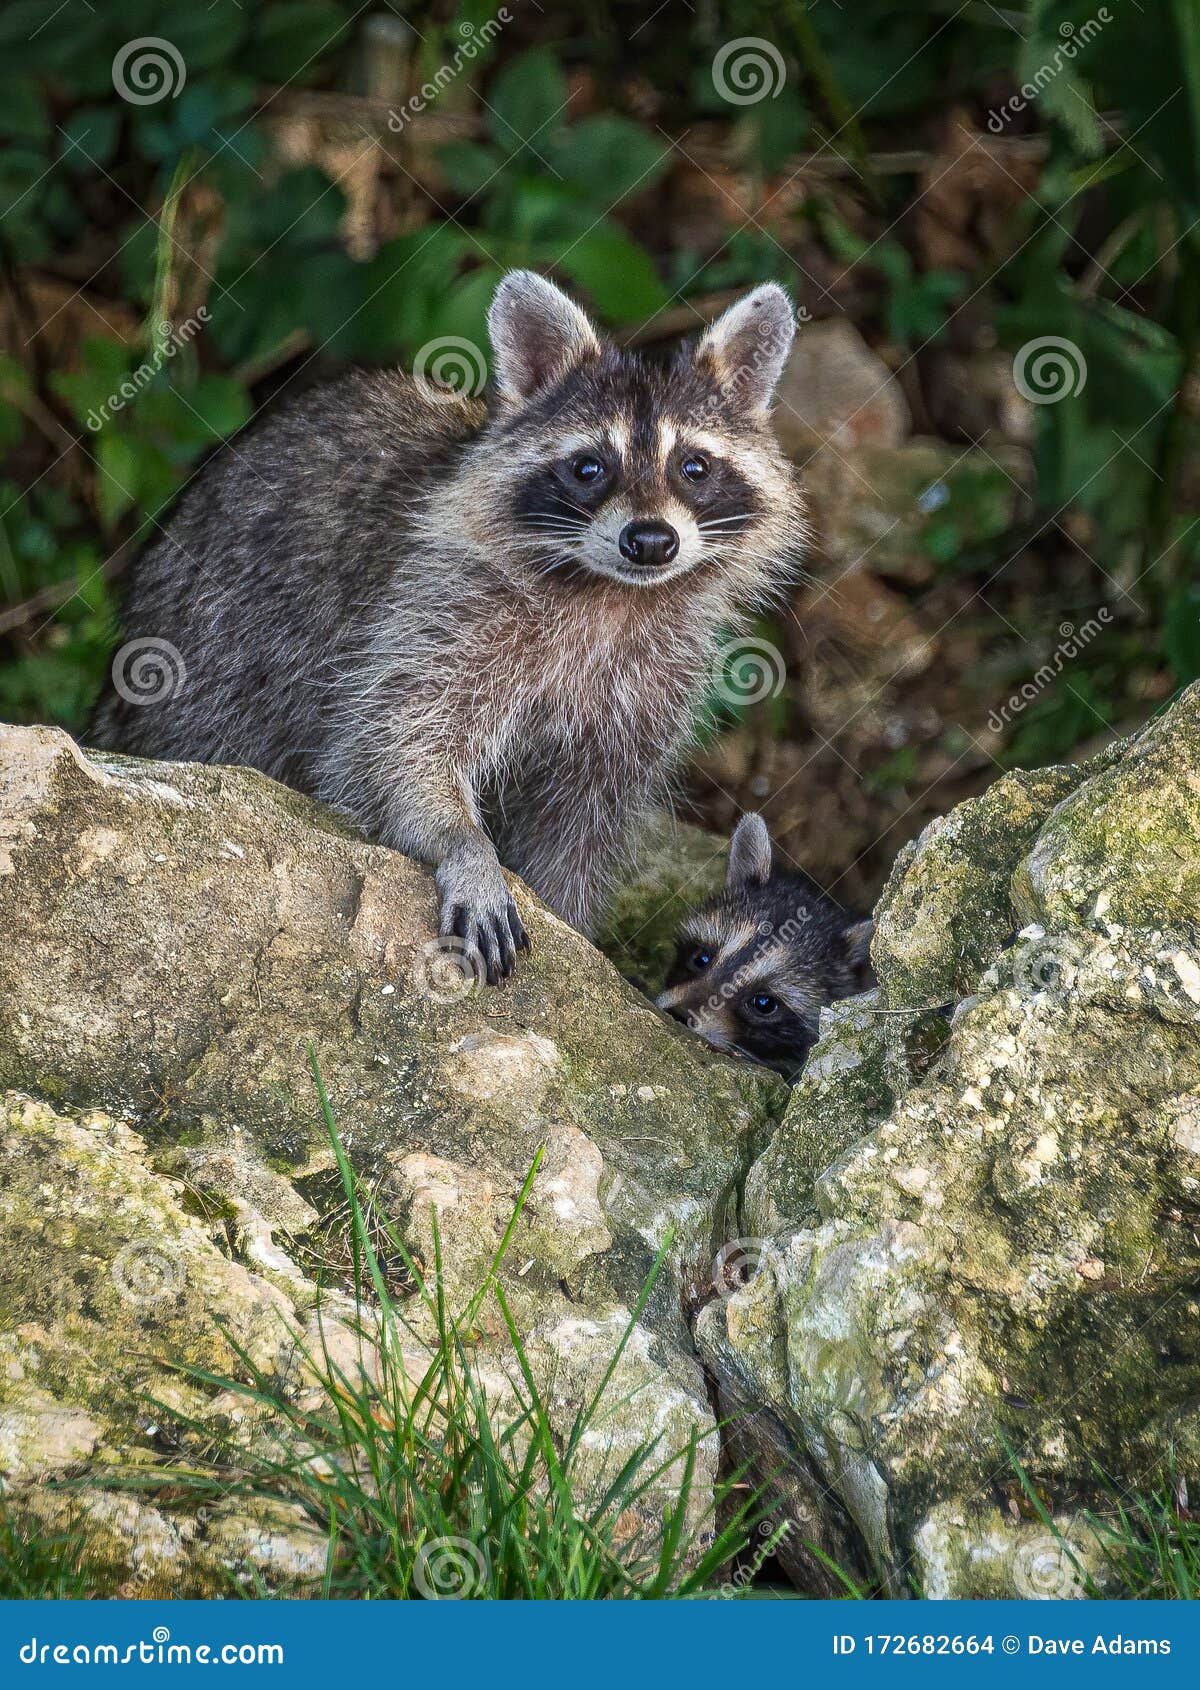 Mother And Baby Raccoon In My Backyard Peering Over The Rock Wall Stock Photo Image Of Furry Backyard 172682664